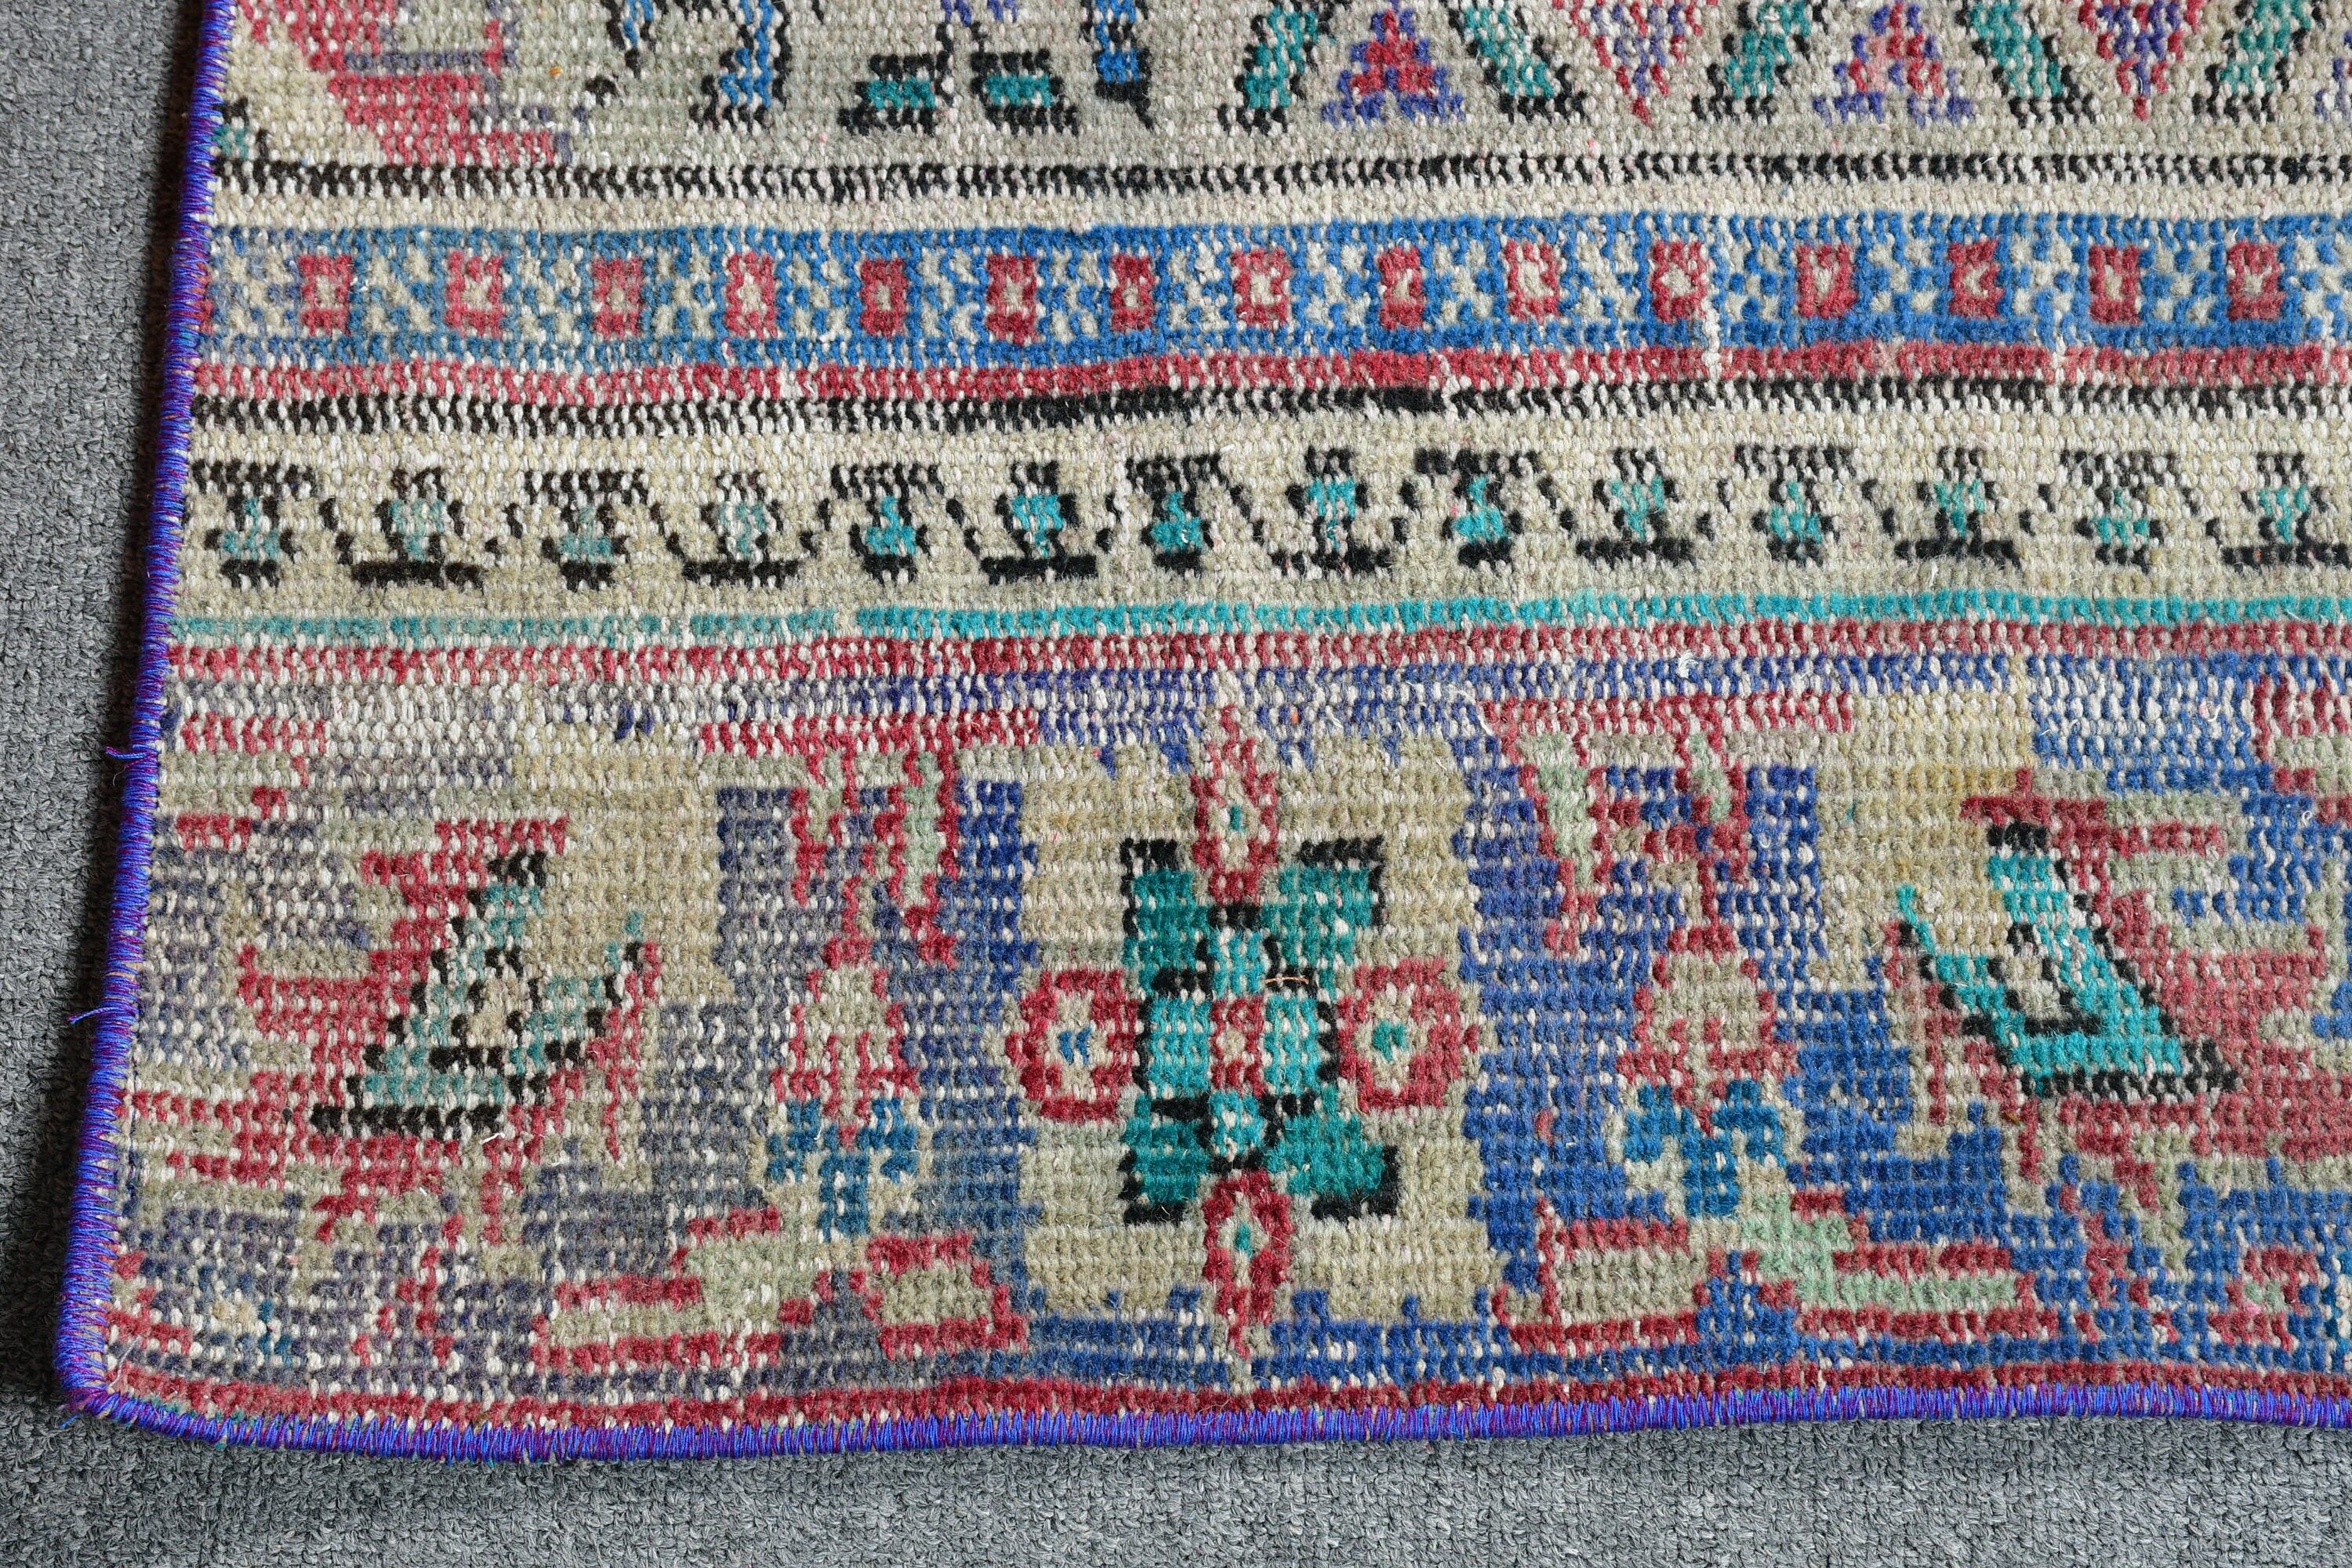 Turkish Rug, Cool Rug, Rugs for Car Mat, Moroccan Rugs, 1.7x3.3 ft Small Rug, Bath Rug, Entry Rugs, Brown Oriental Rugs, Vintage Rug